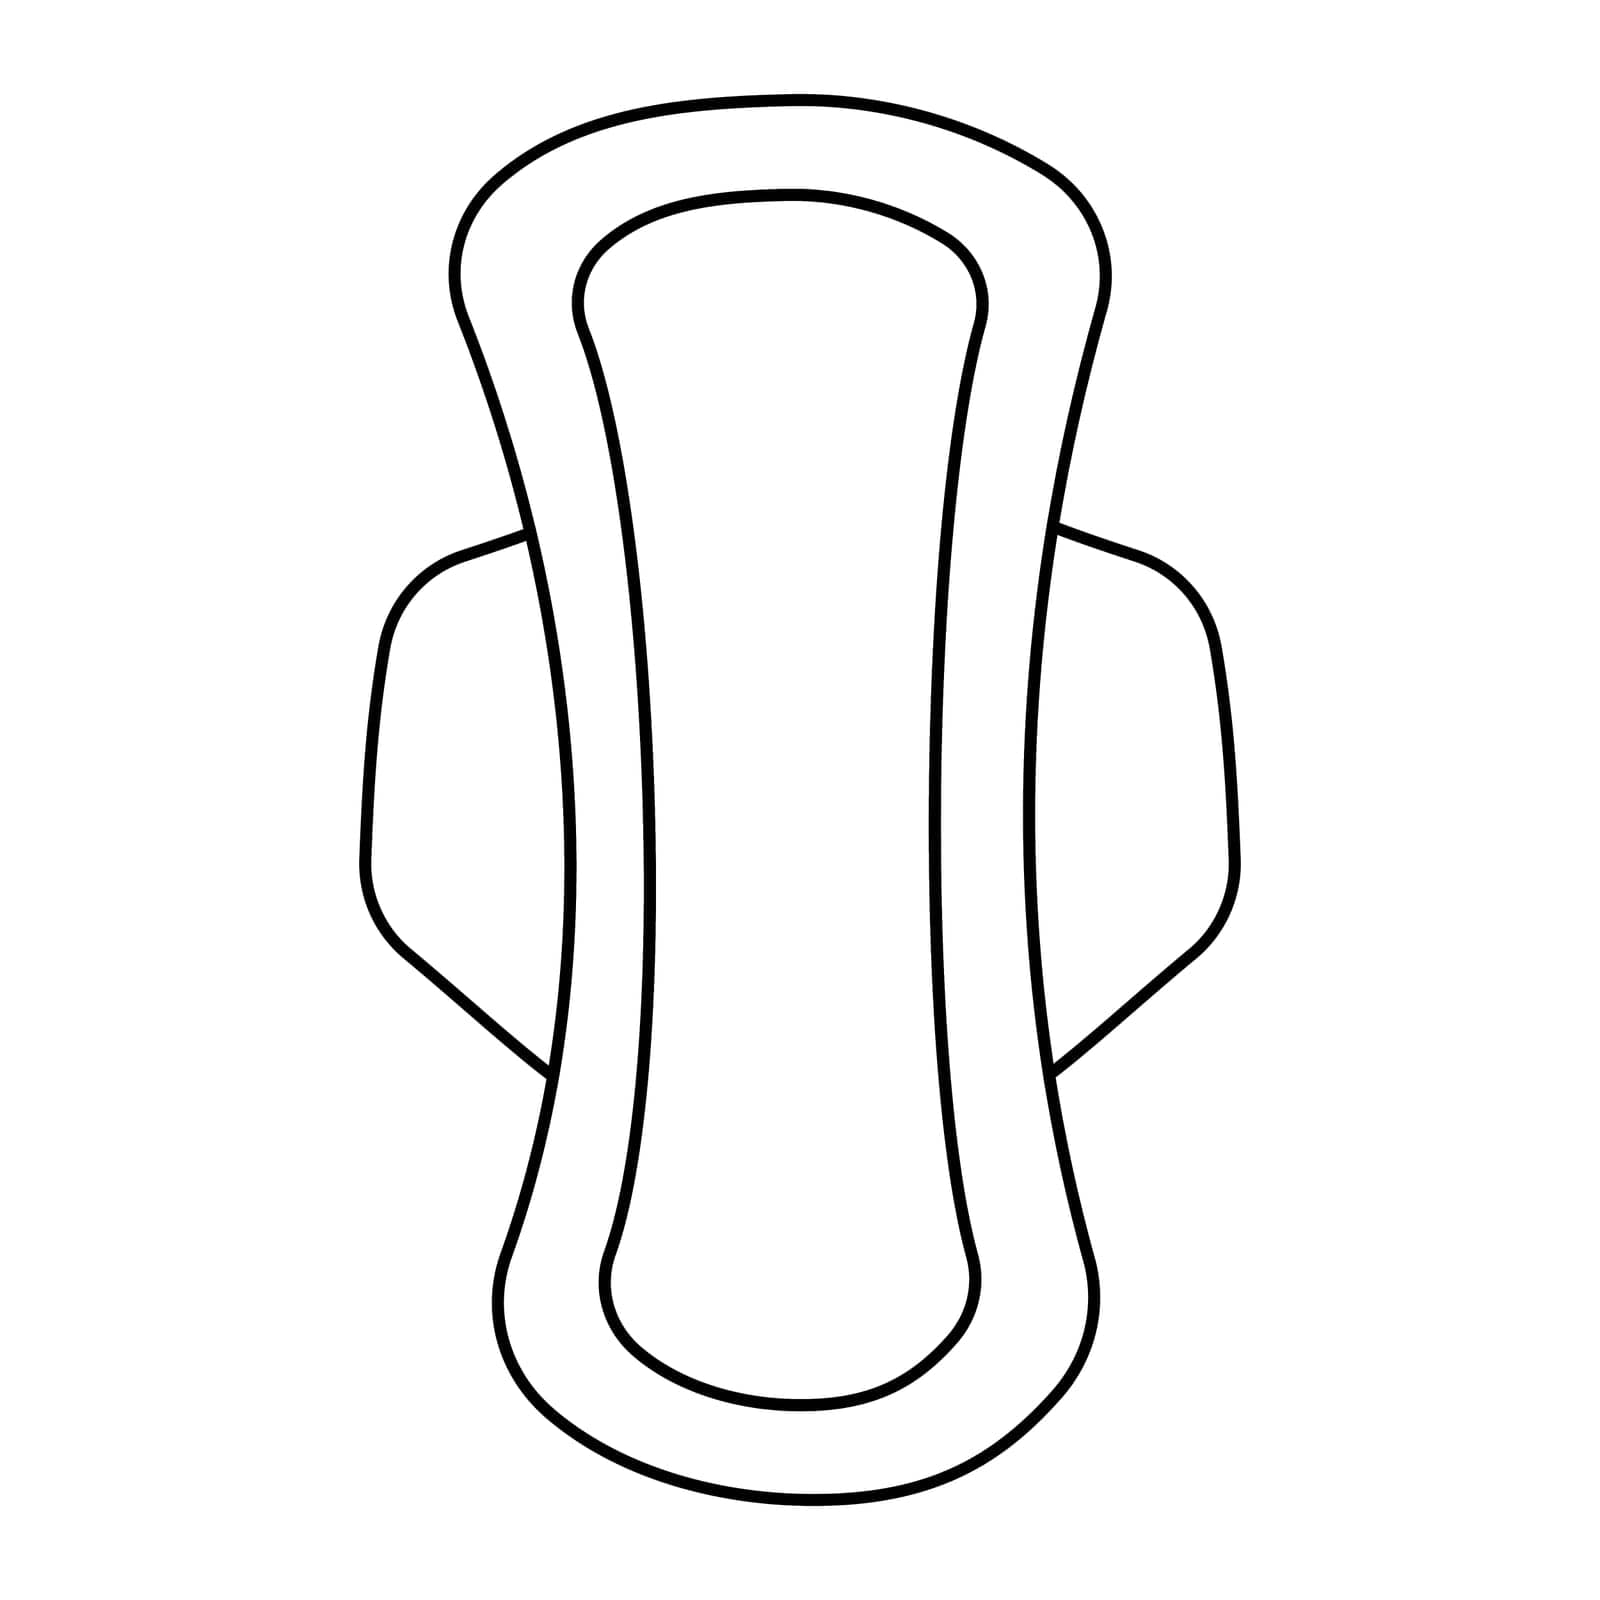 pads feminine hygiene cycle menstruation icon element line doodle thong underpants